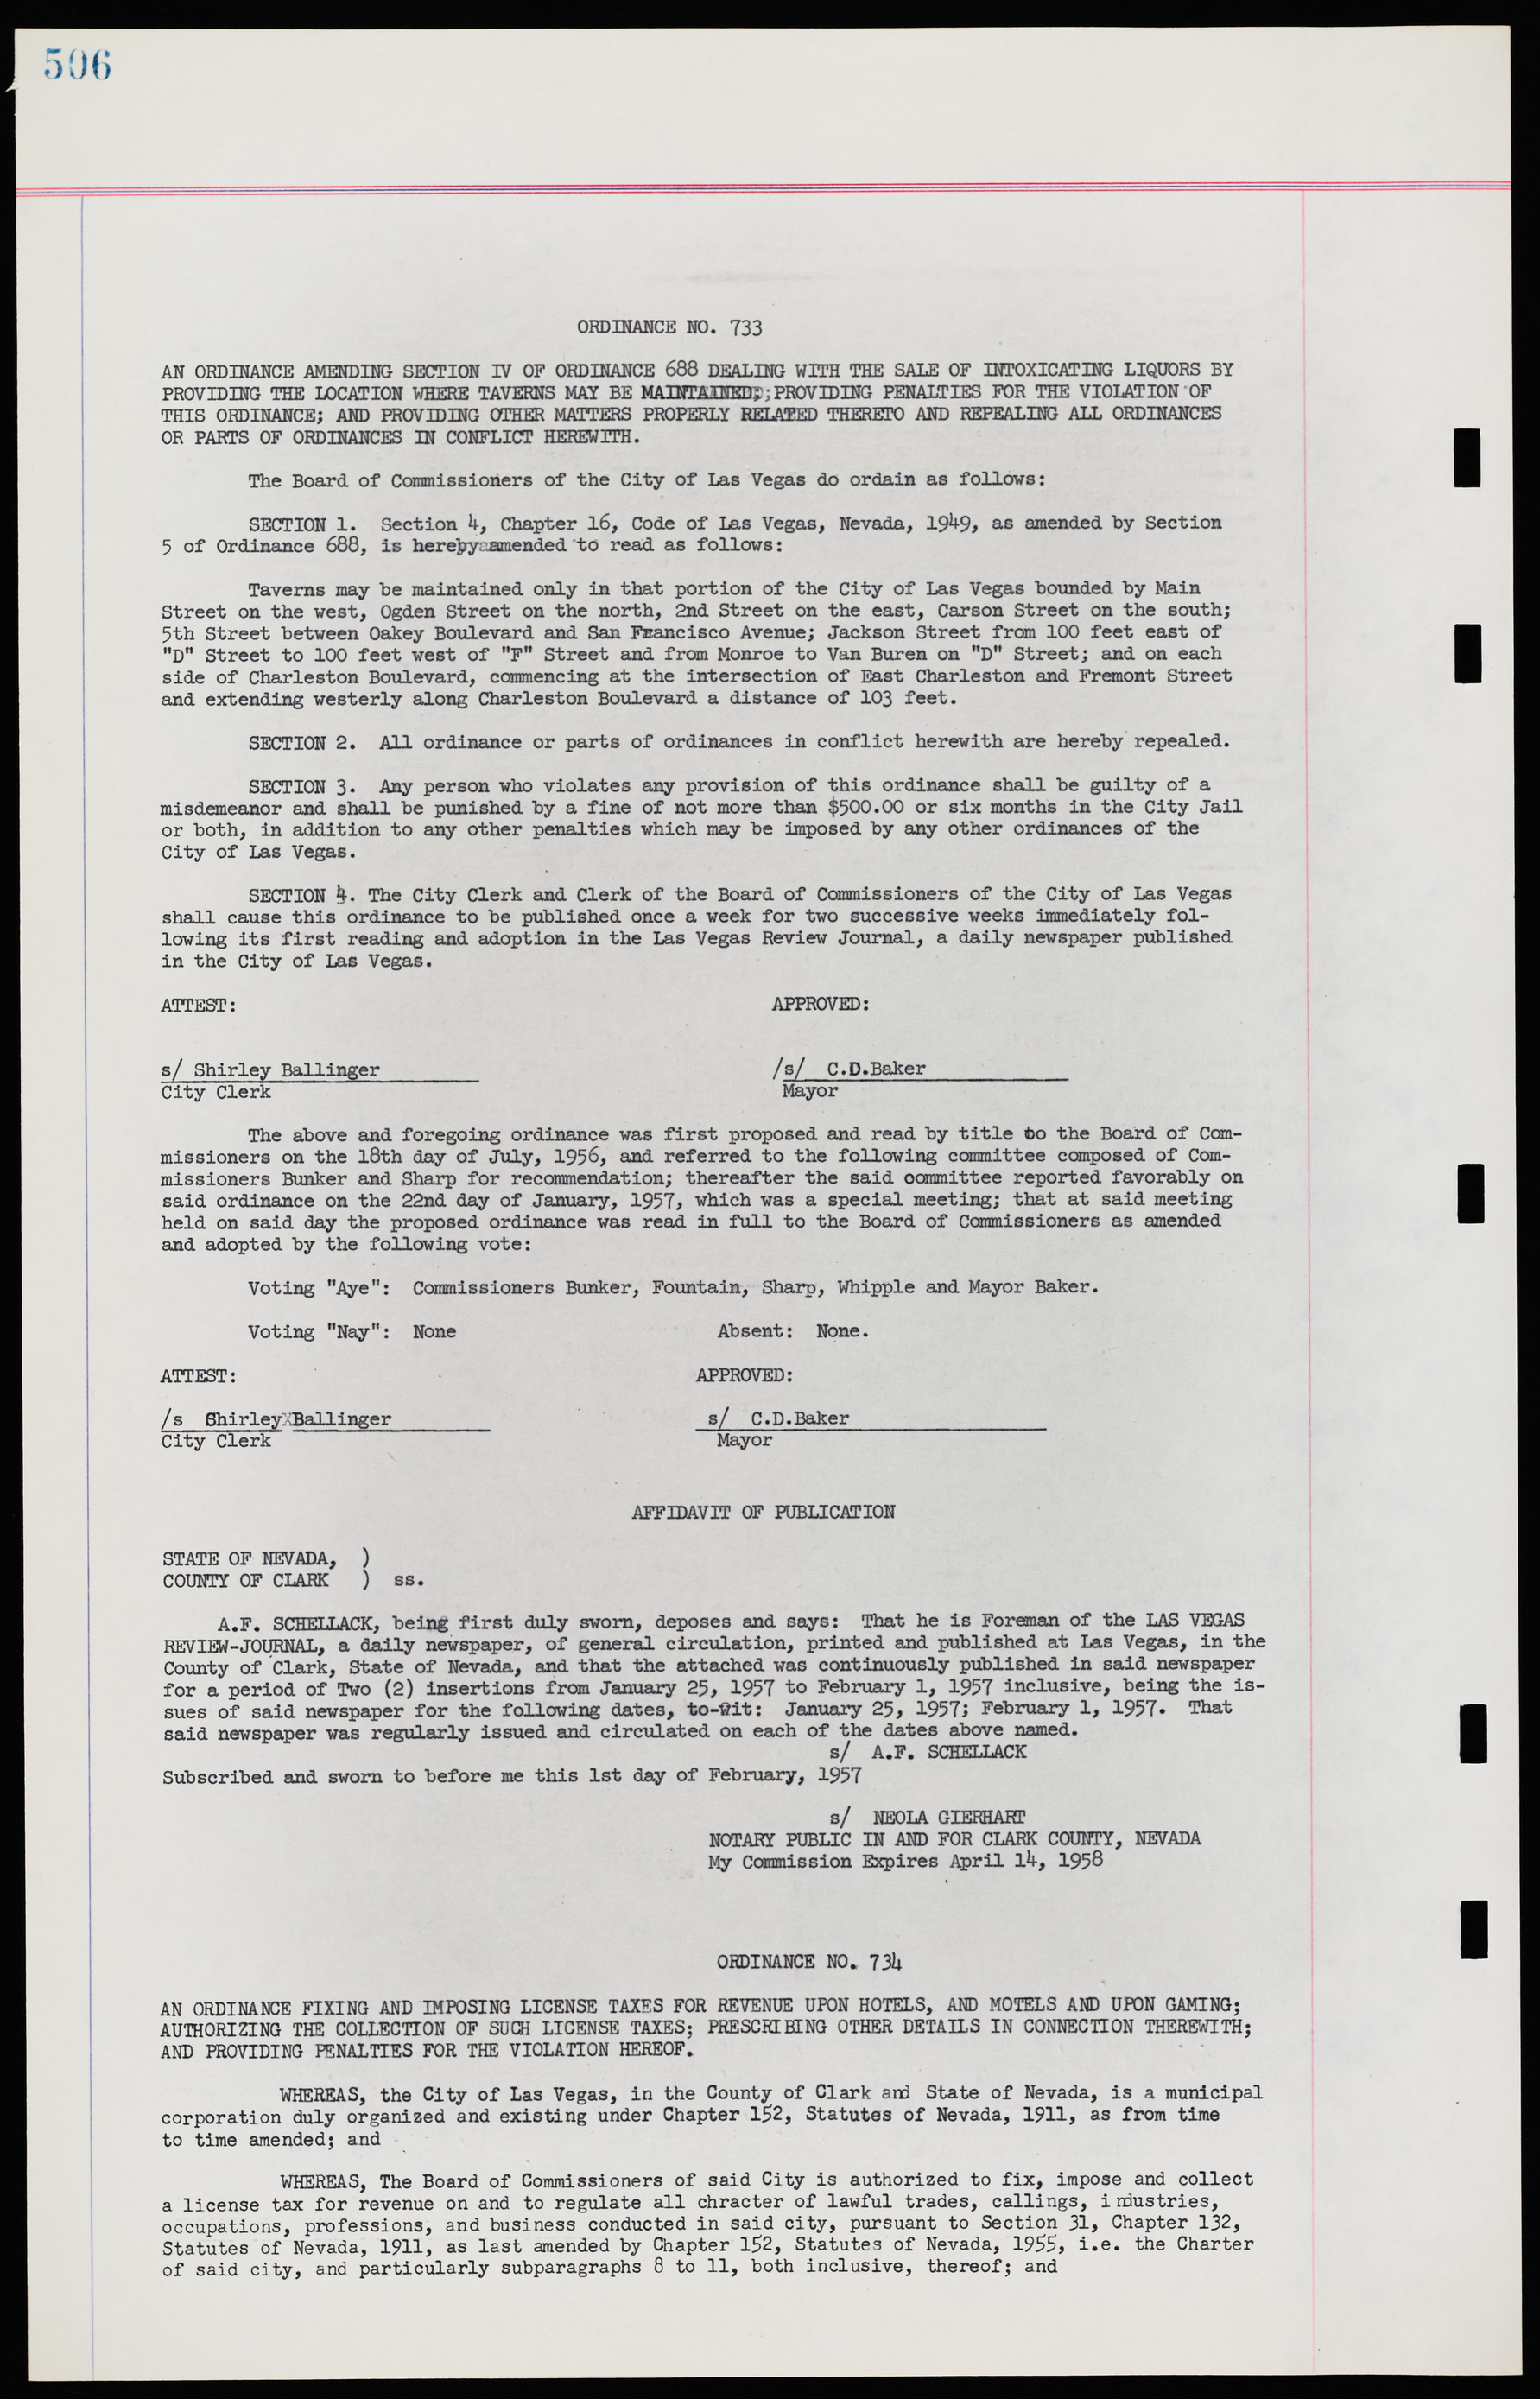 Las Vegas City Ordinances, November 13, 1950 to August 6, 1958, lvc000015-514